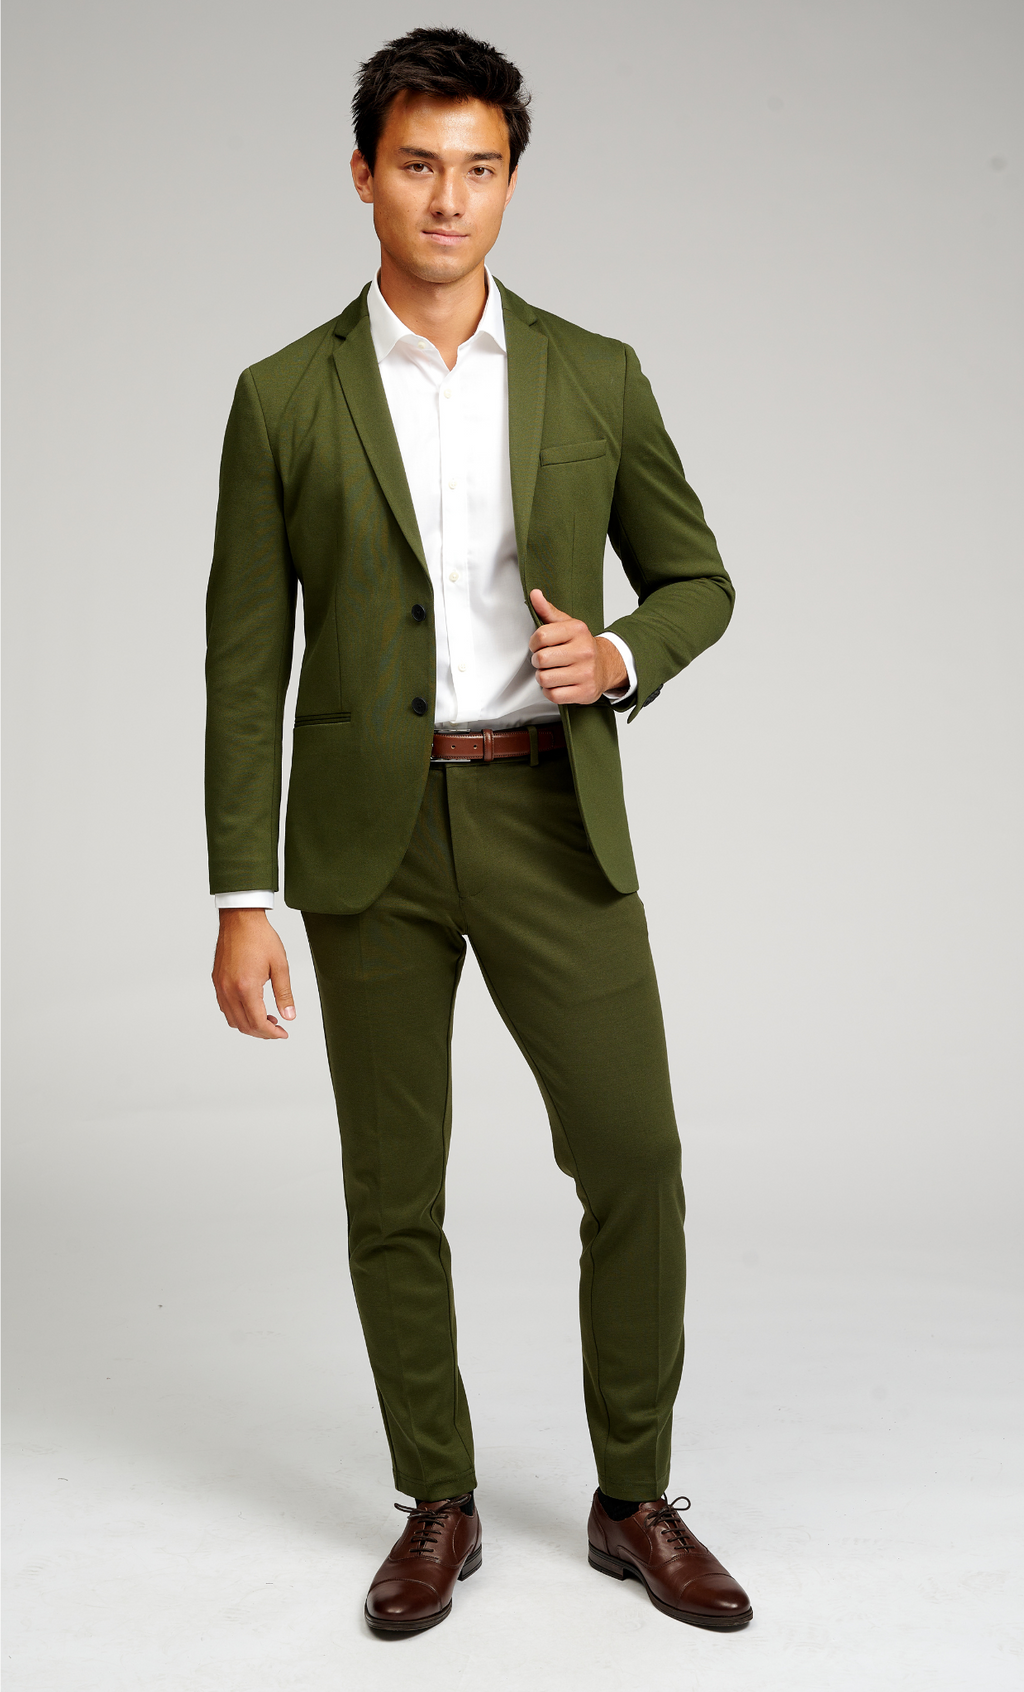 The Original Performance Suit (Dark Green) + The Original Performance Shirt - Package Deal